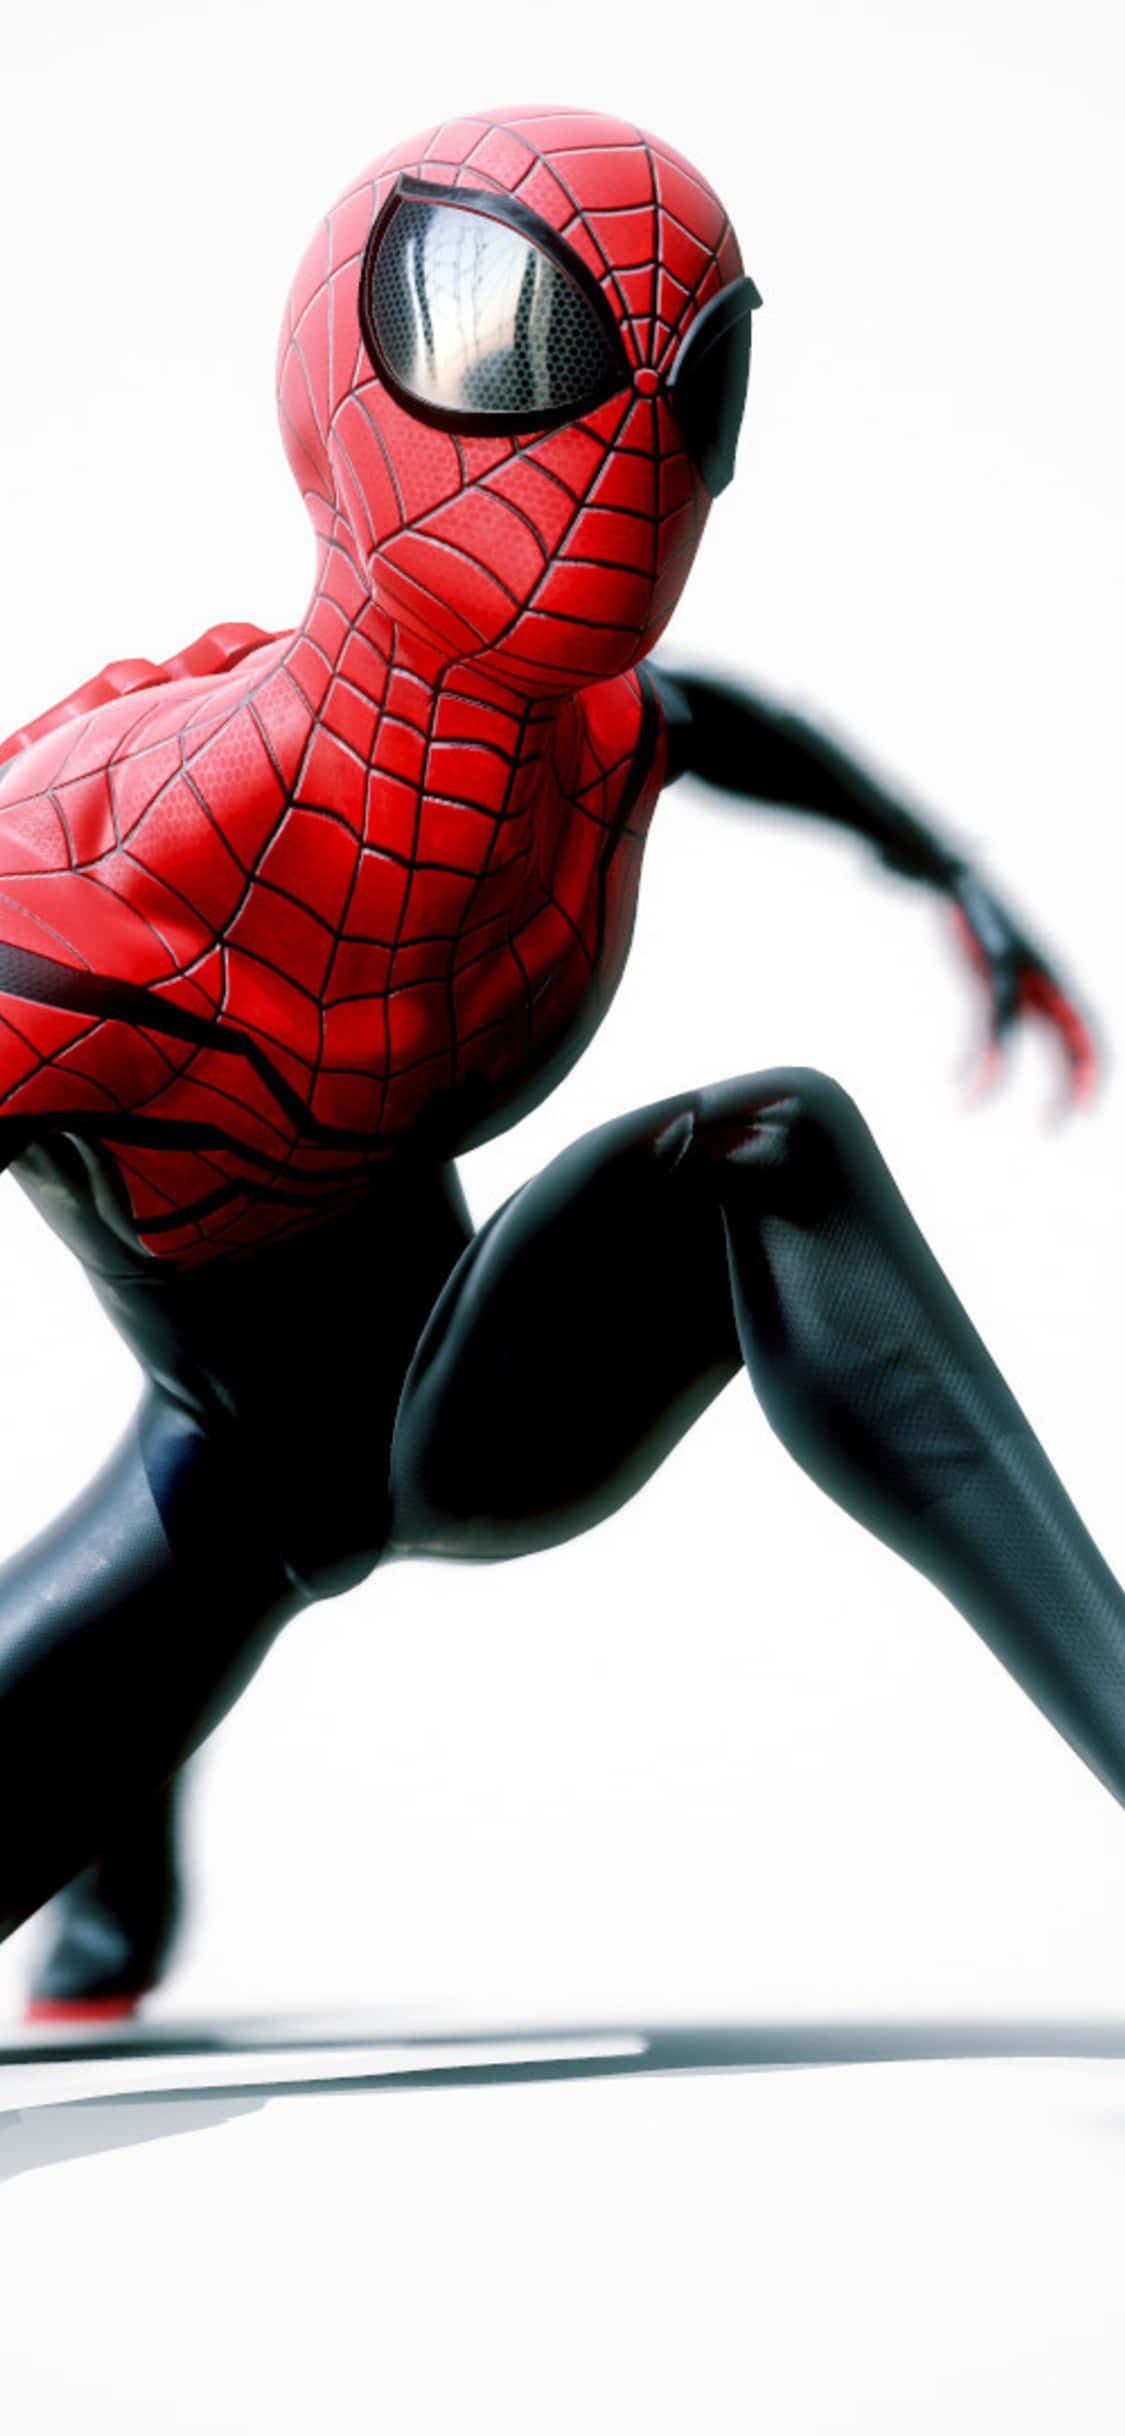 Superior Spider-man Swinging Through the City Wallpaper